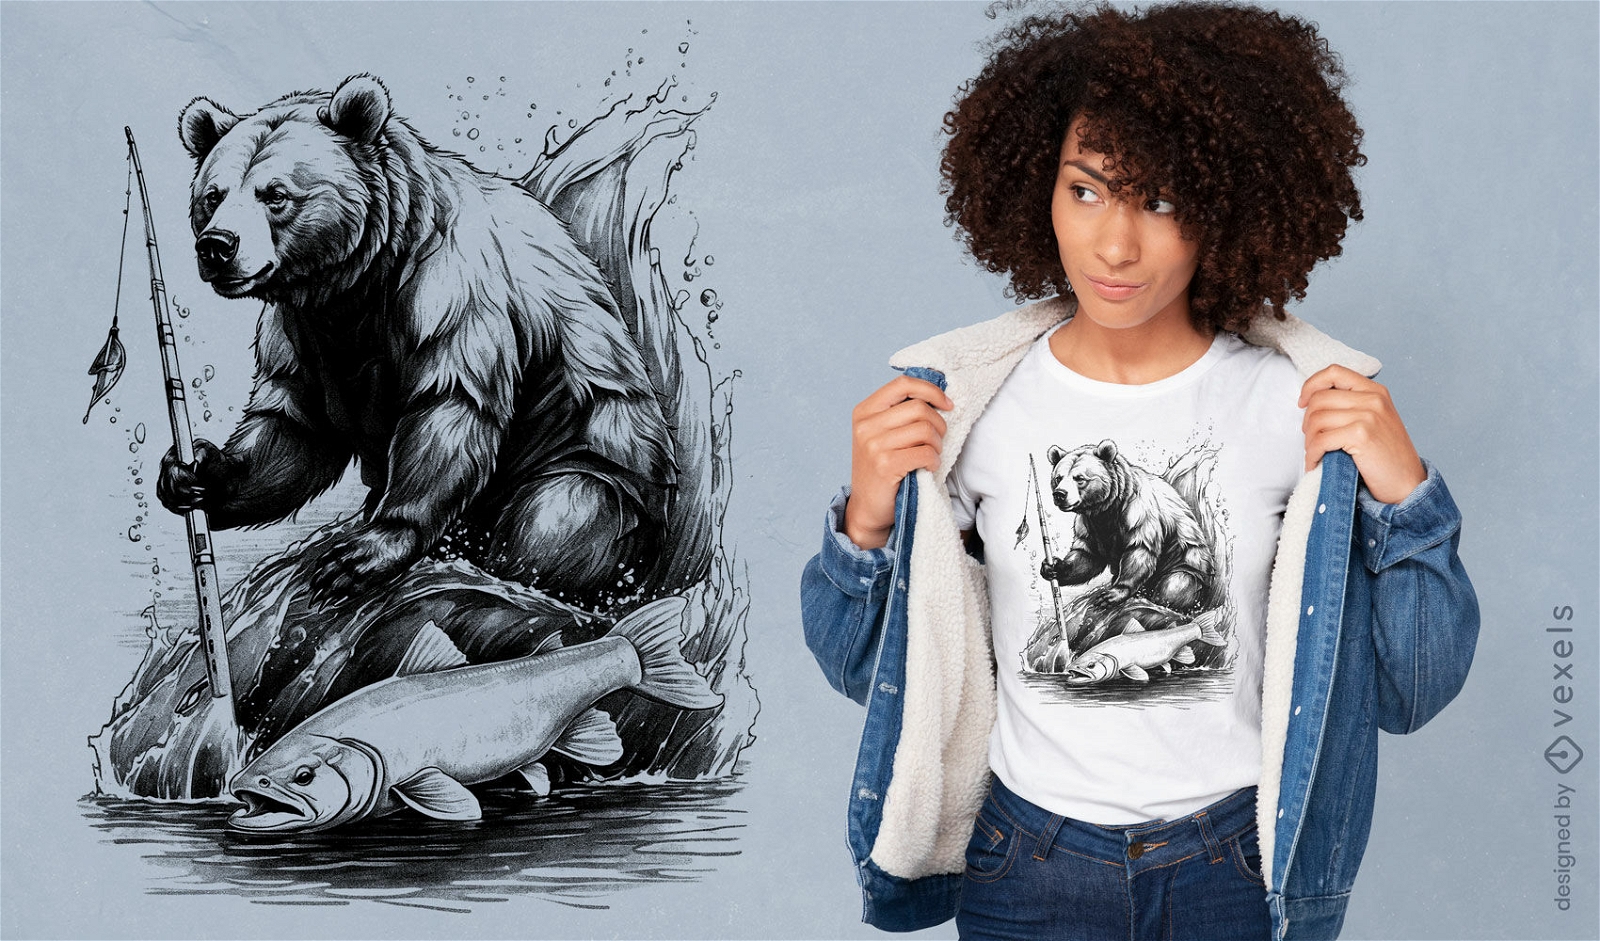 Diseño de camiseta con ilustración de pesca de osos.